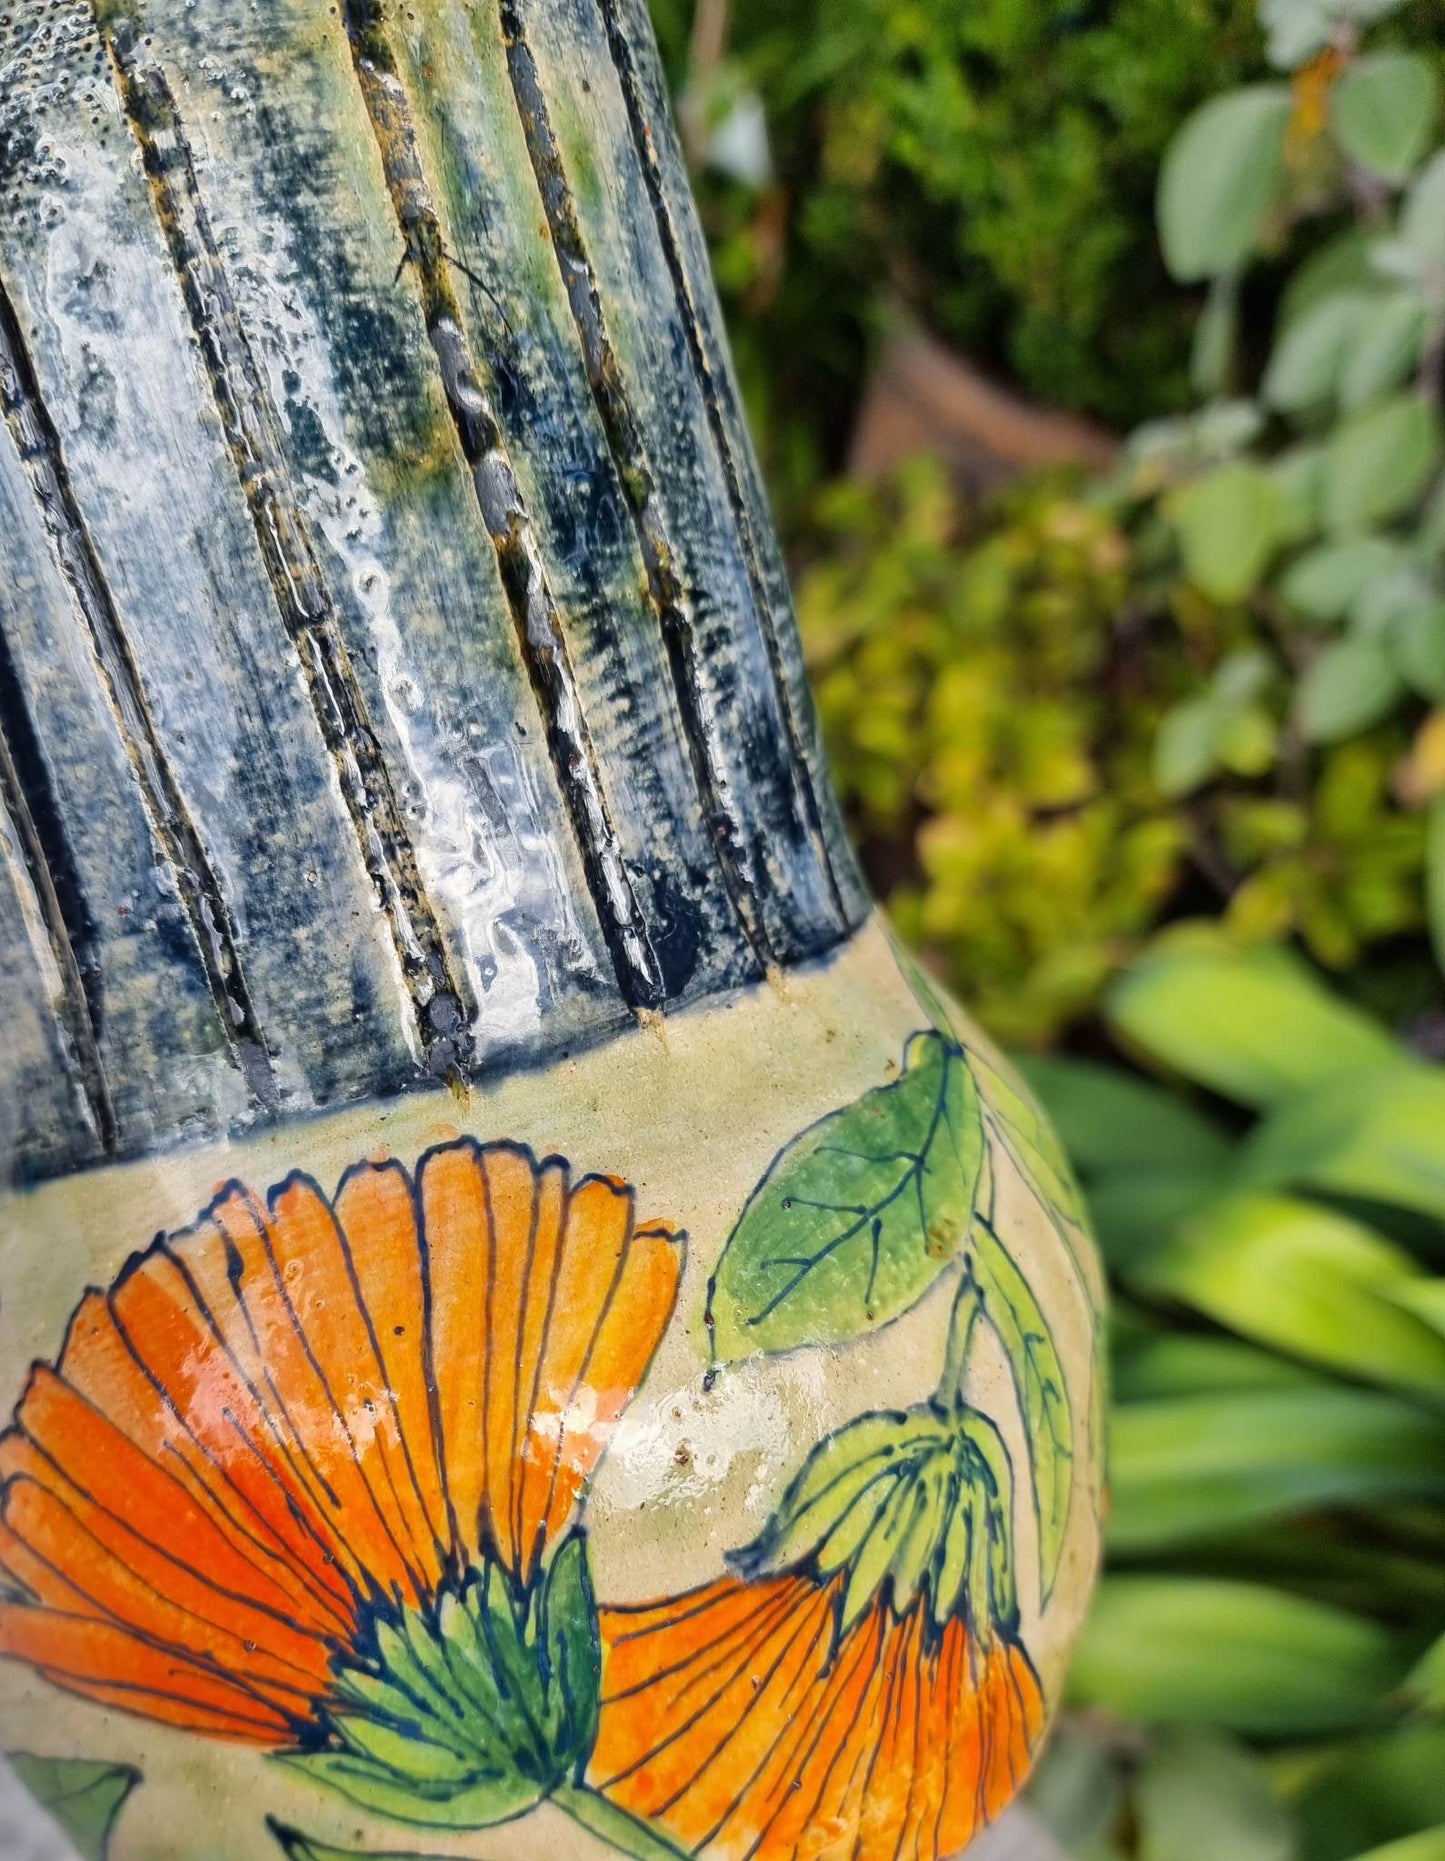 Calendula Vase # 2